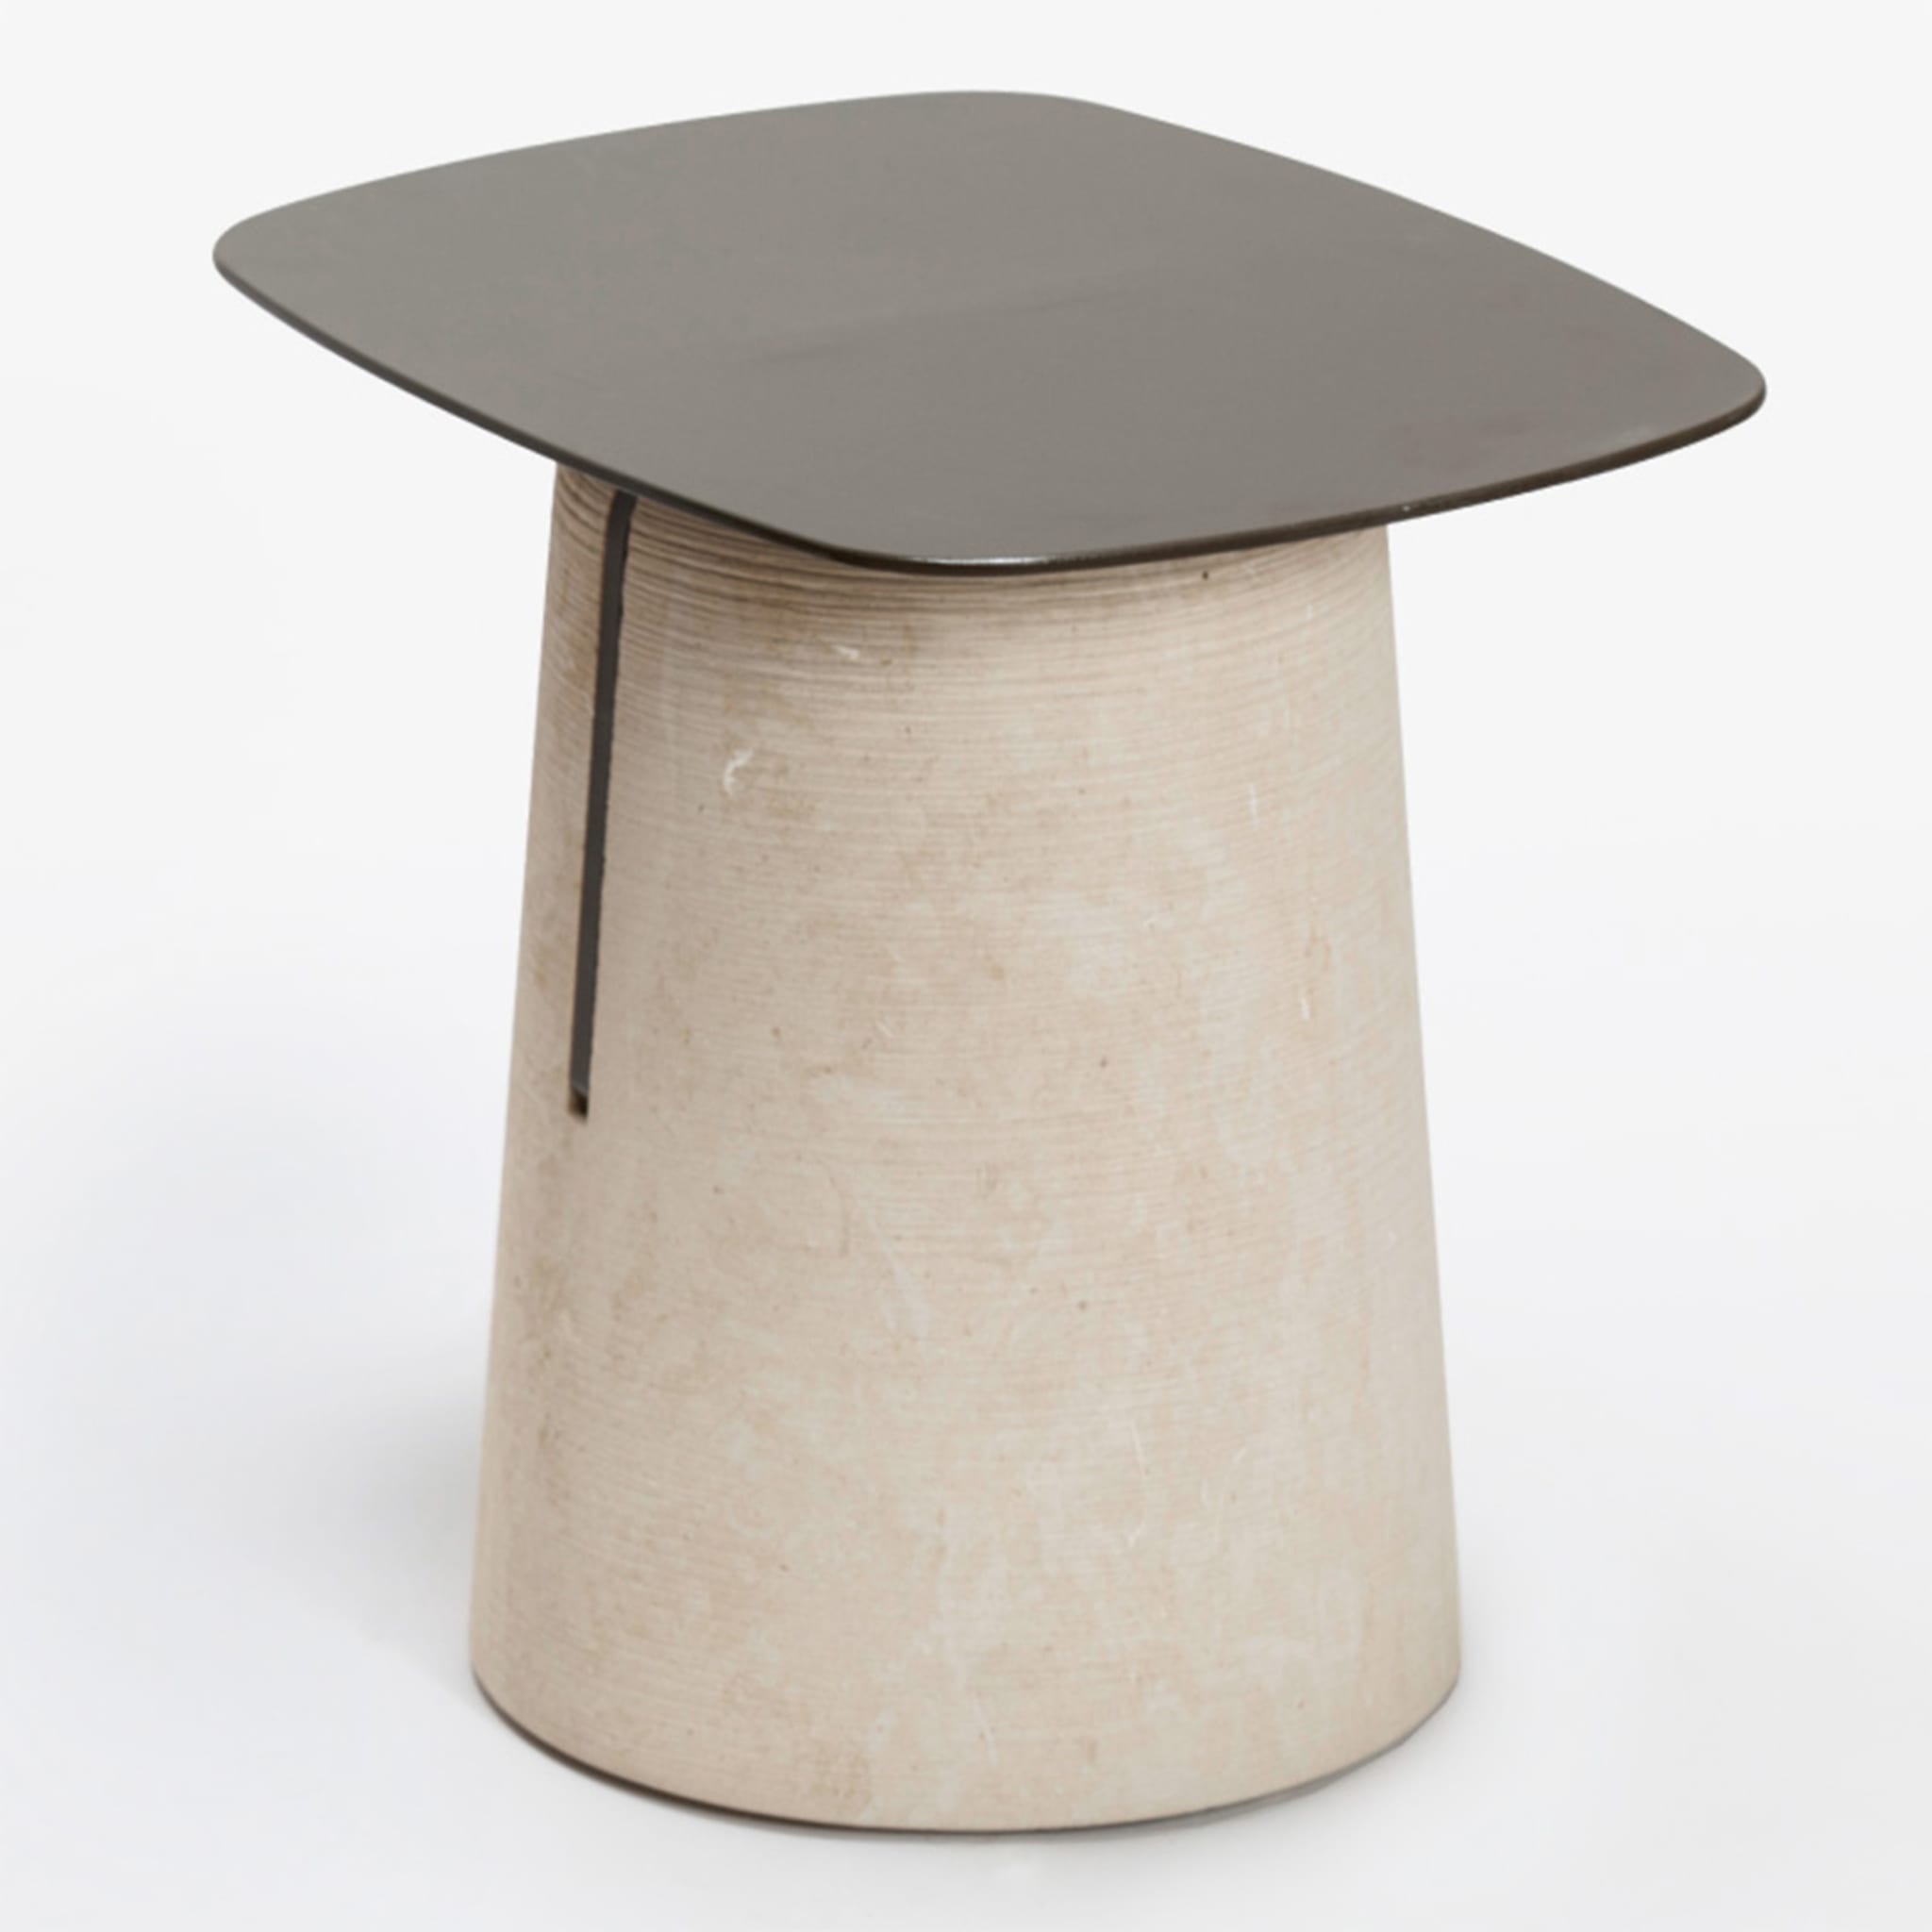 Piro Side Table by Lucidi & Pevere - Alternative view 1